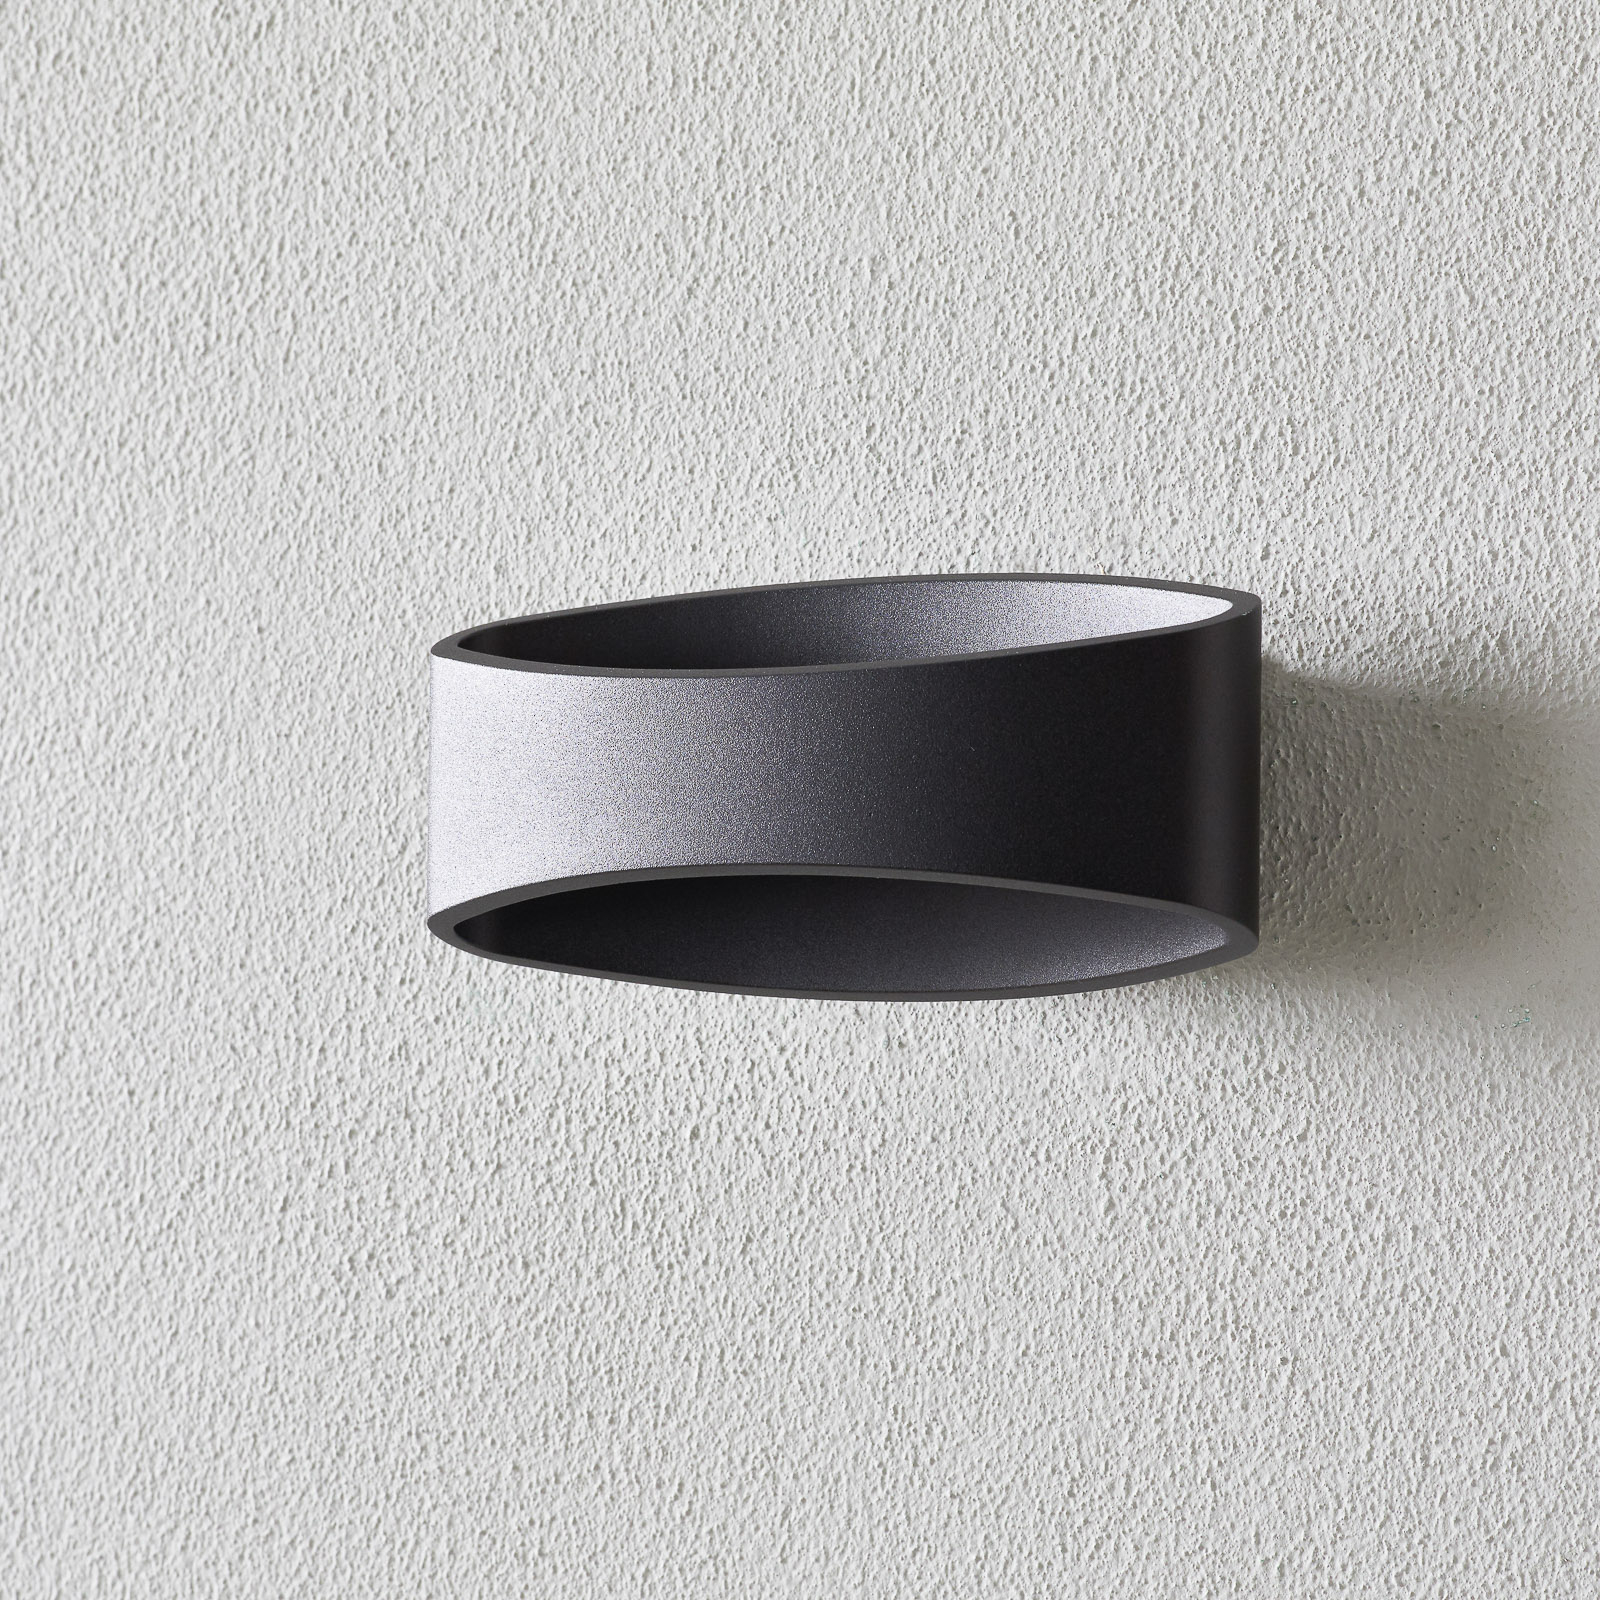 Trame LED wall light, oval shape in black